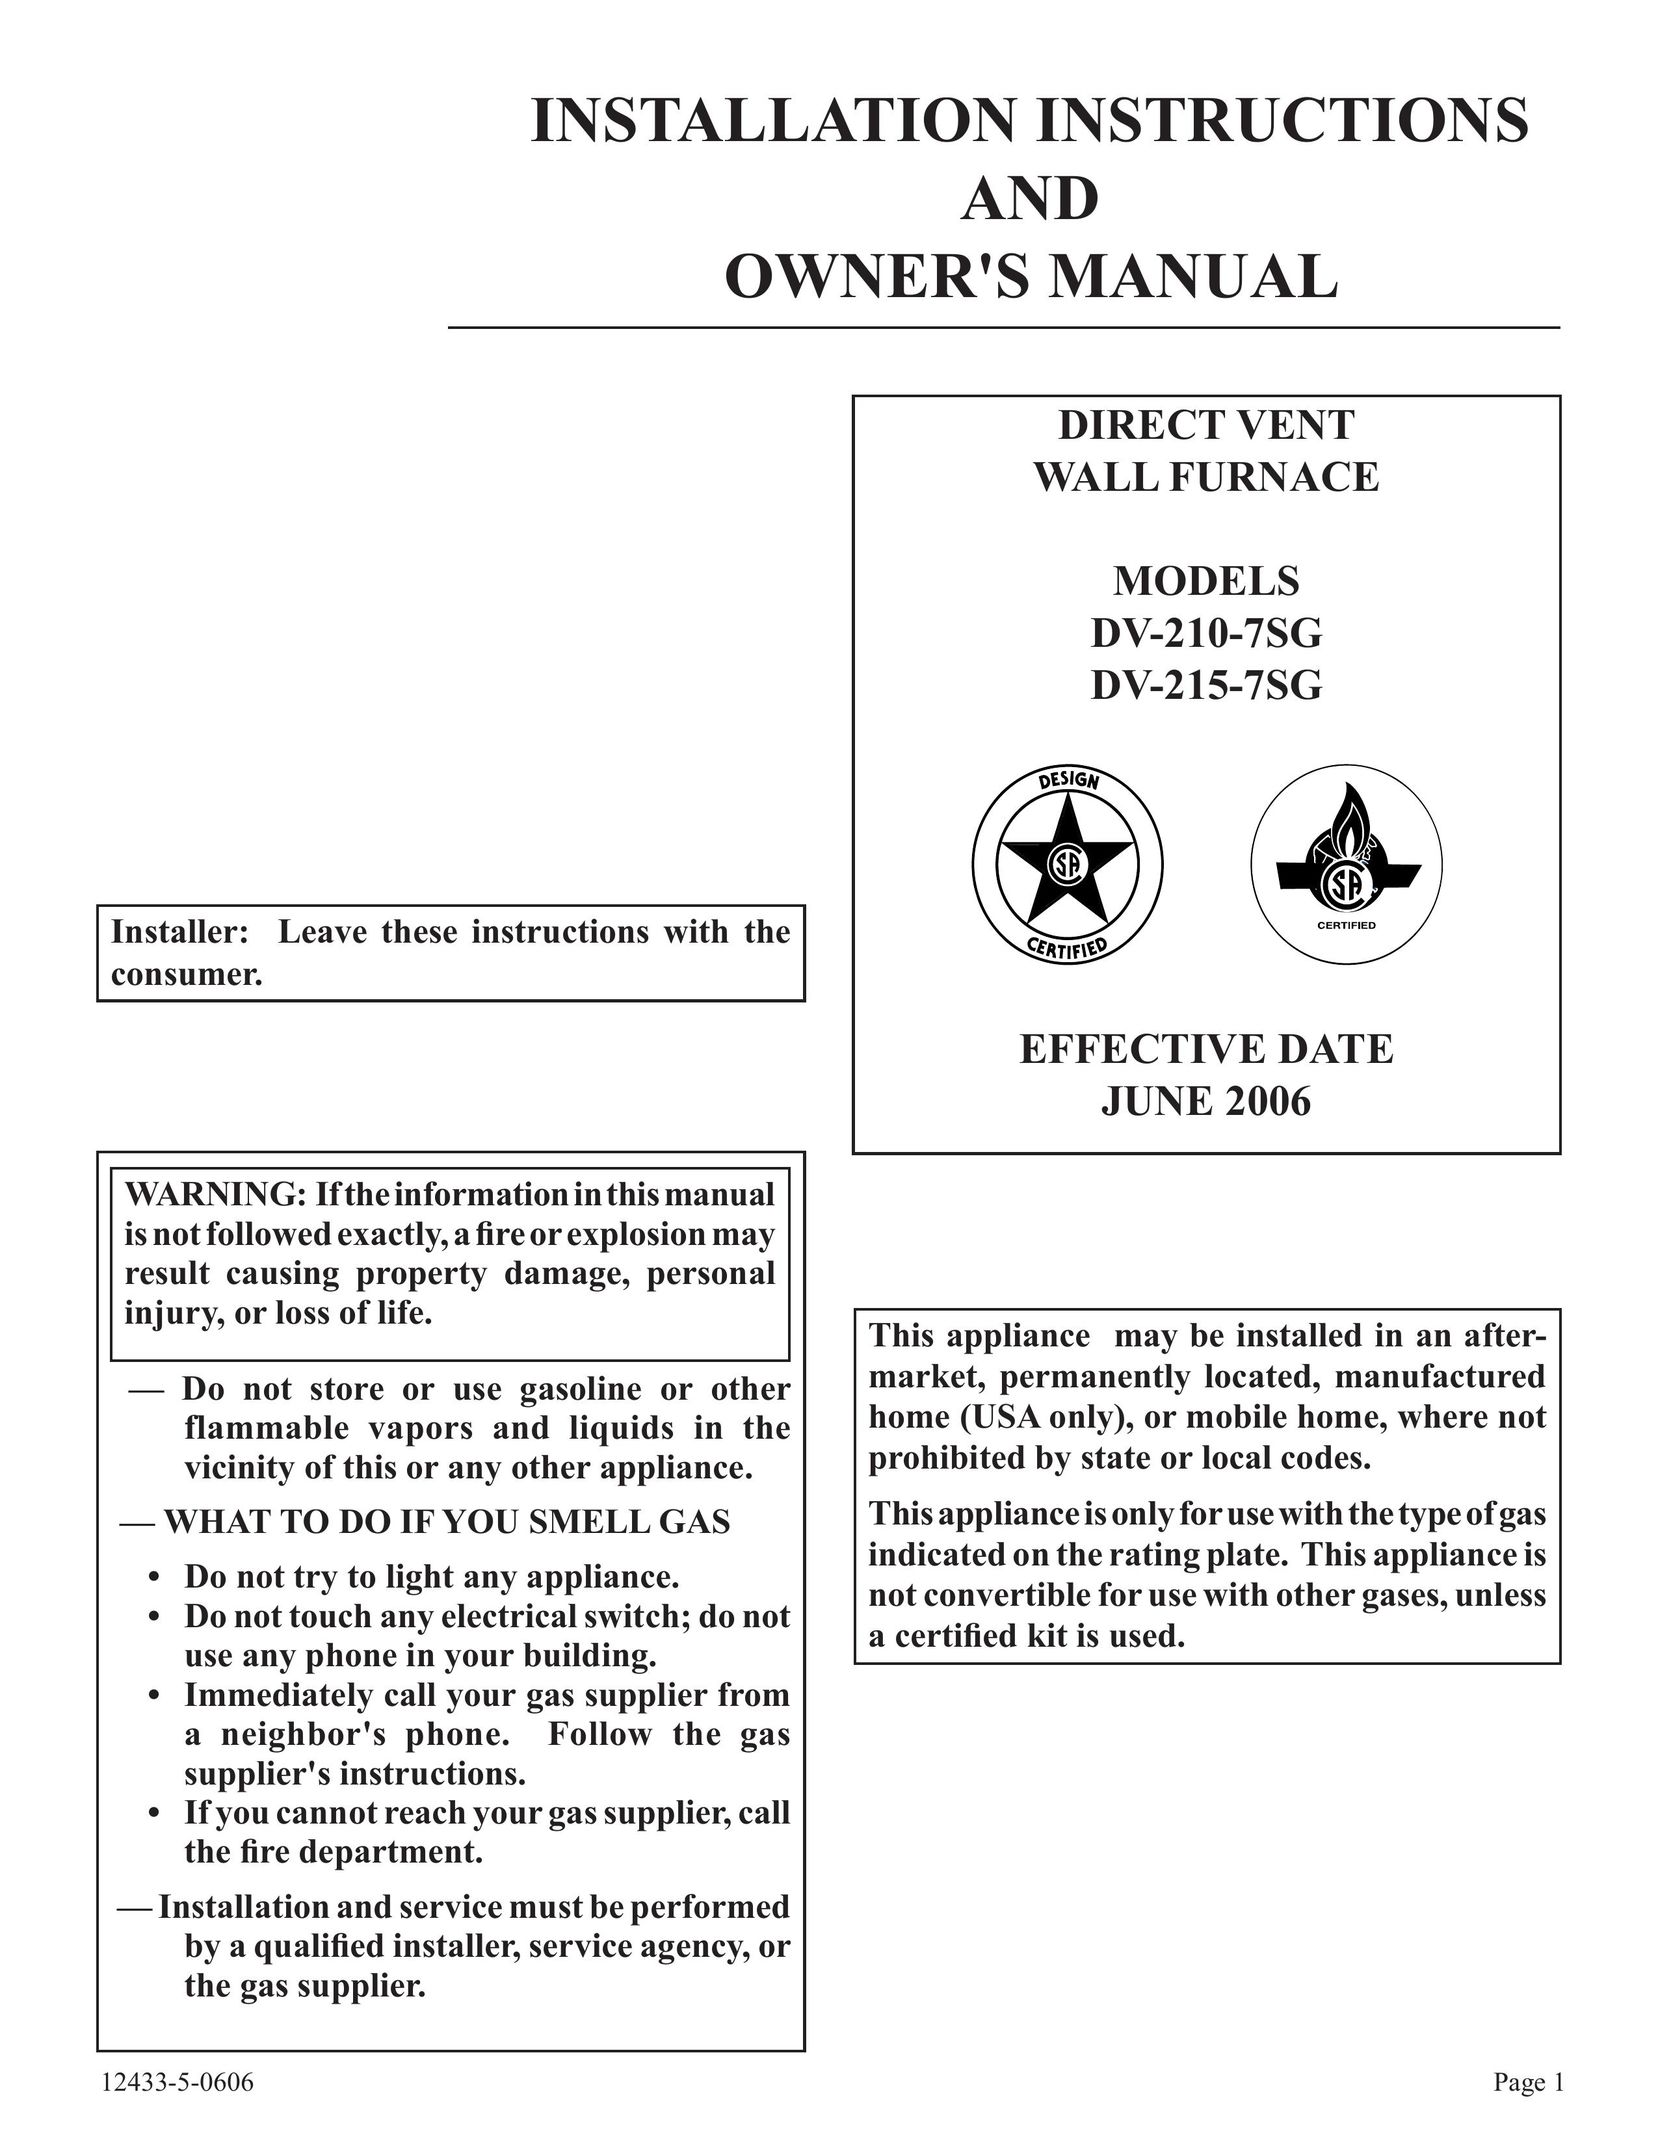 Empire Comfort Systems DV-215-7SG Furnace User Manual